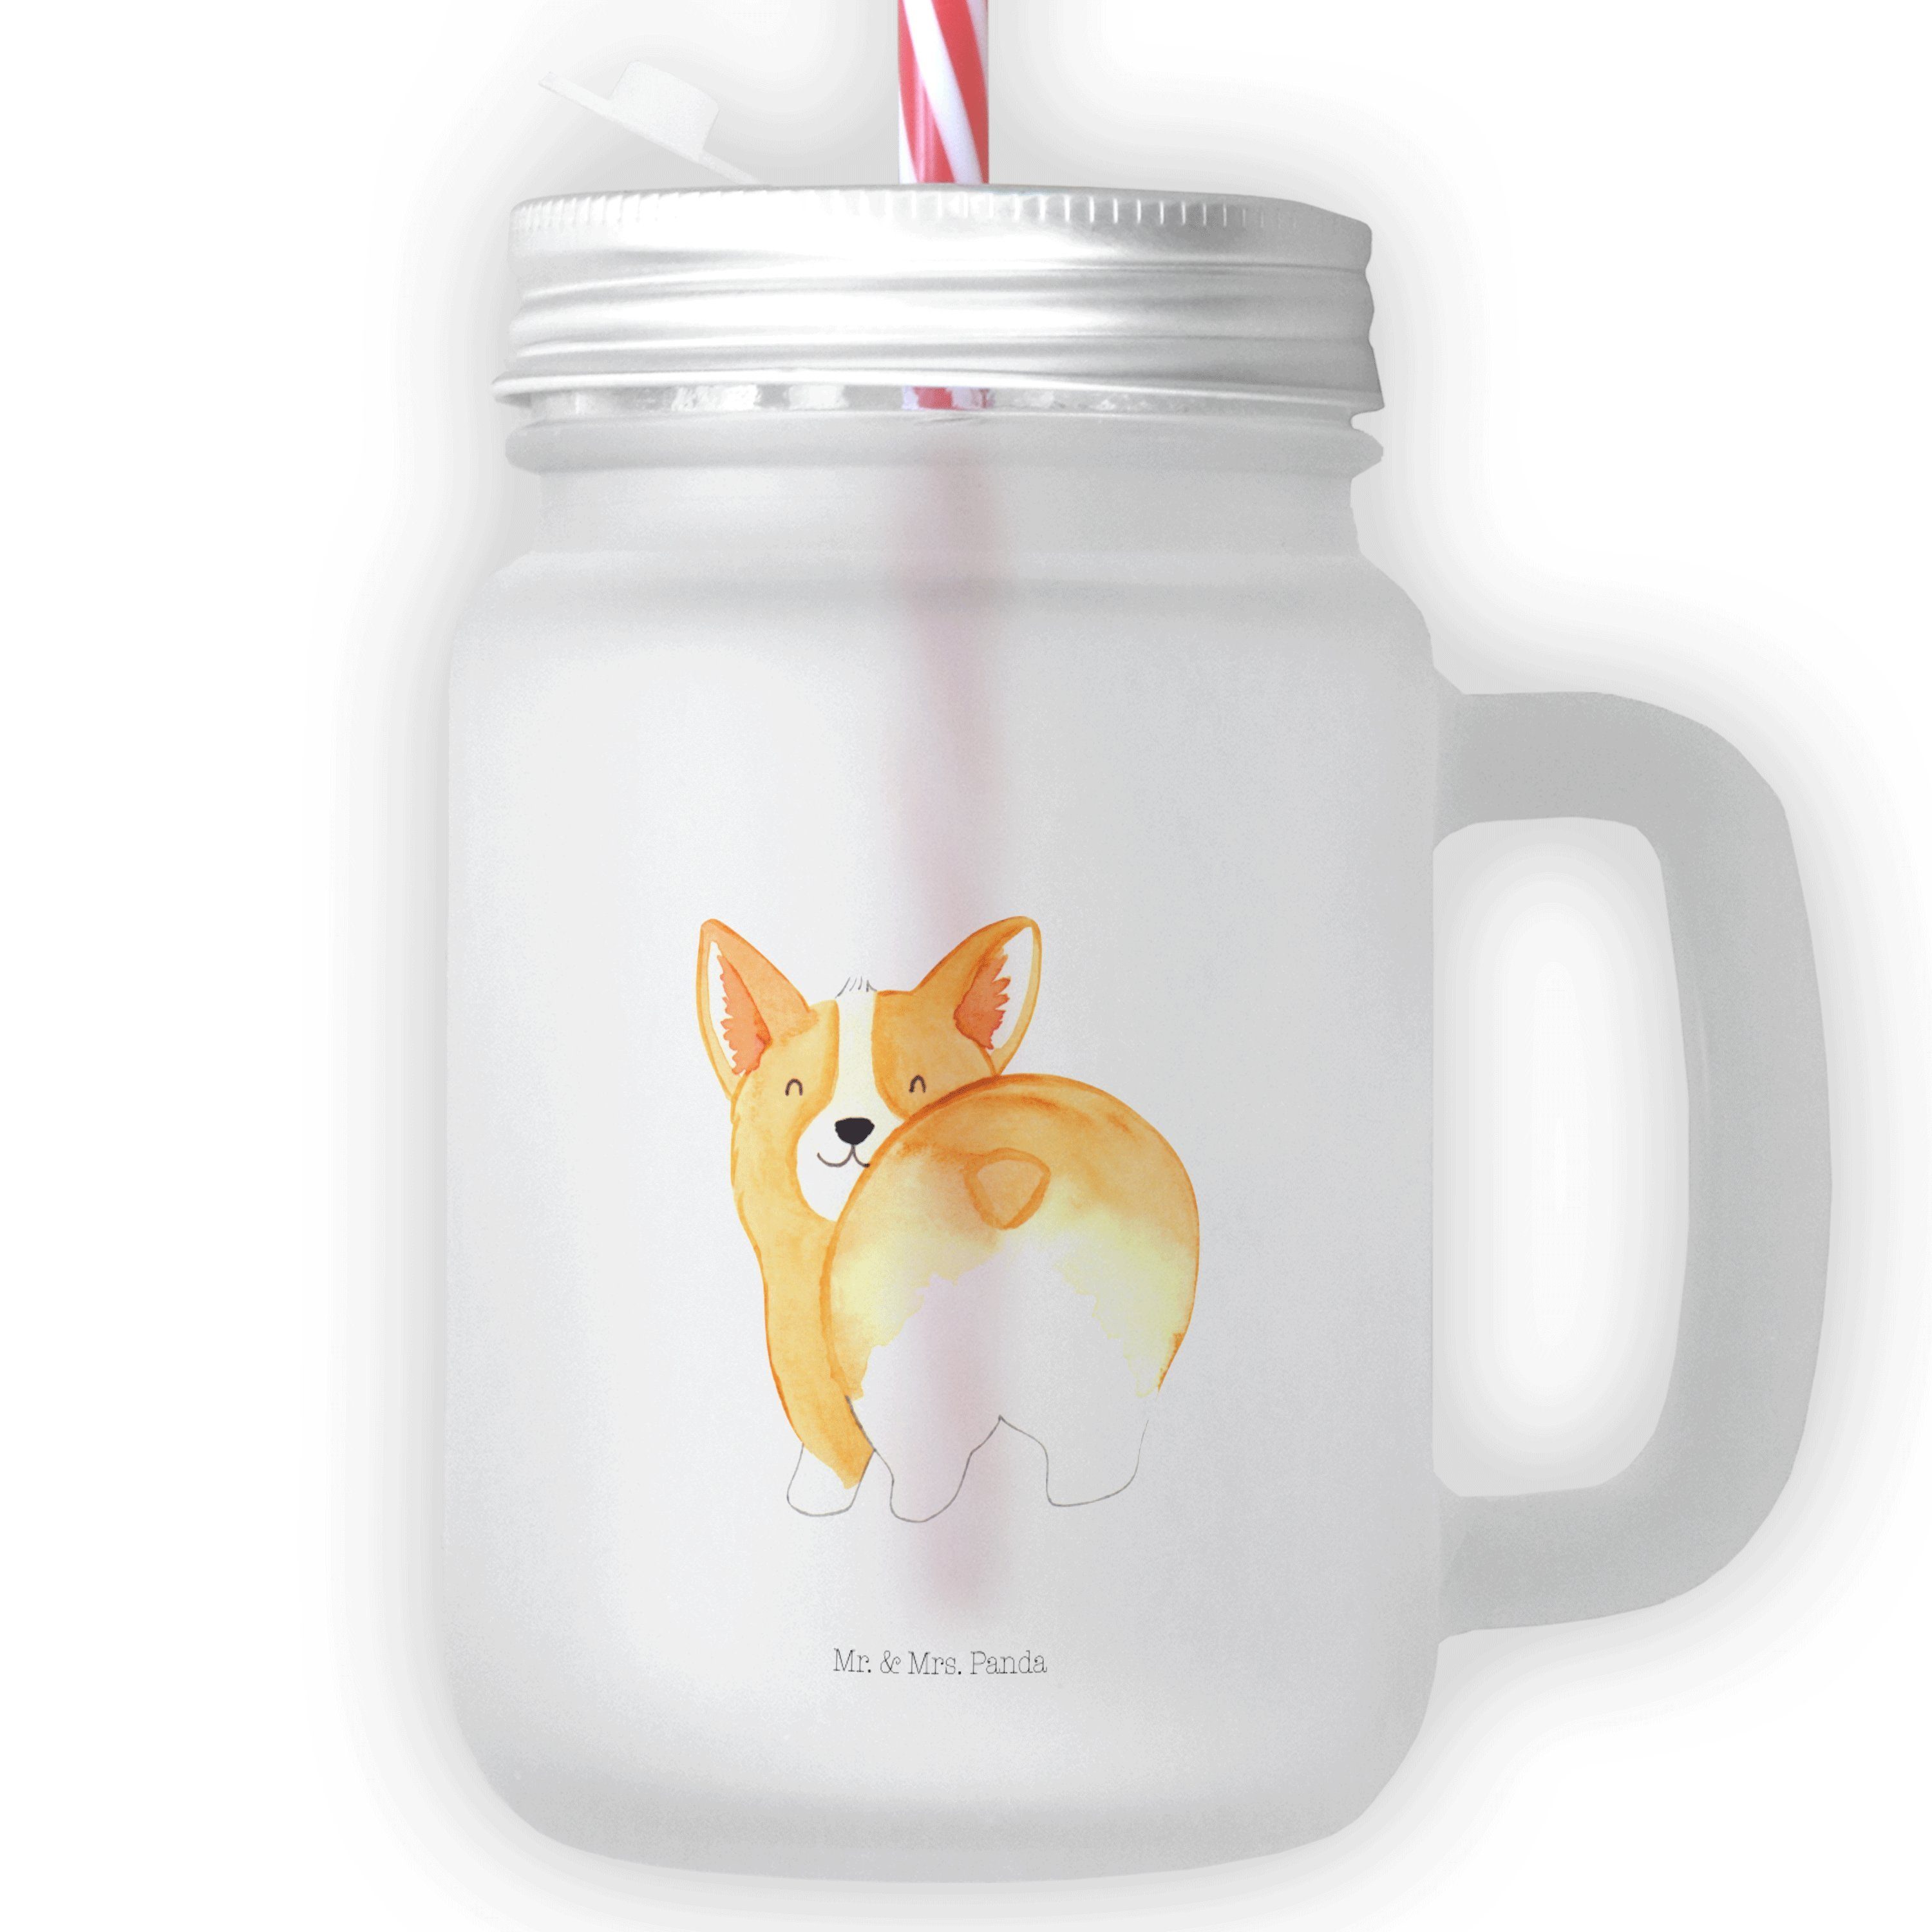 - Retro-Glas, Hund, Glas Glas, Geschenk, Po Premium Mrs. - & Panda Mr. Transparent Corgie Glas Mason Jar,